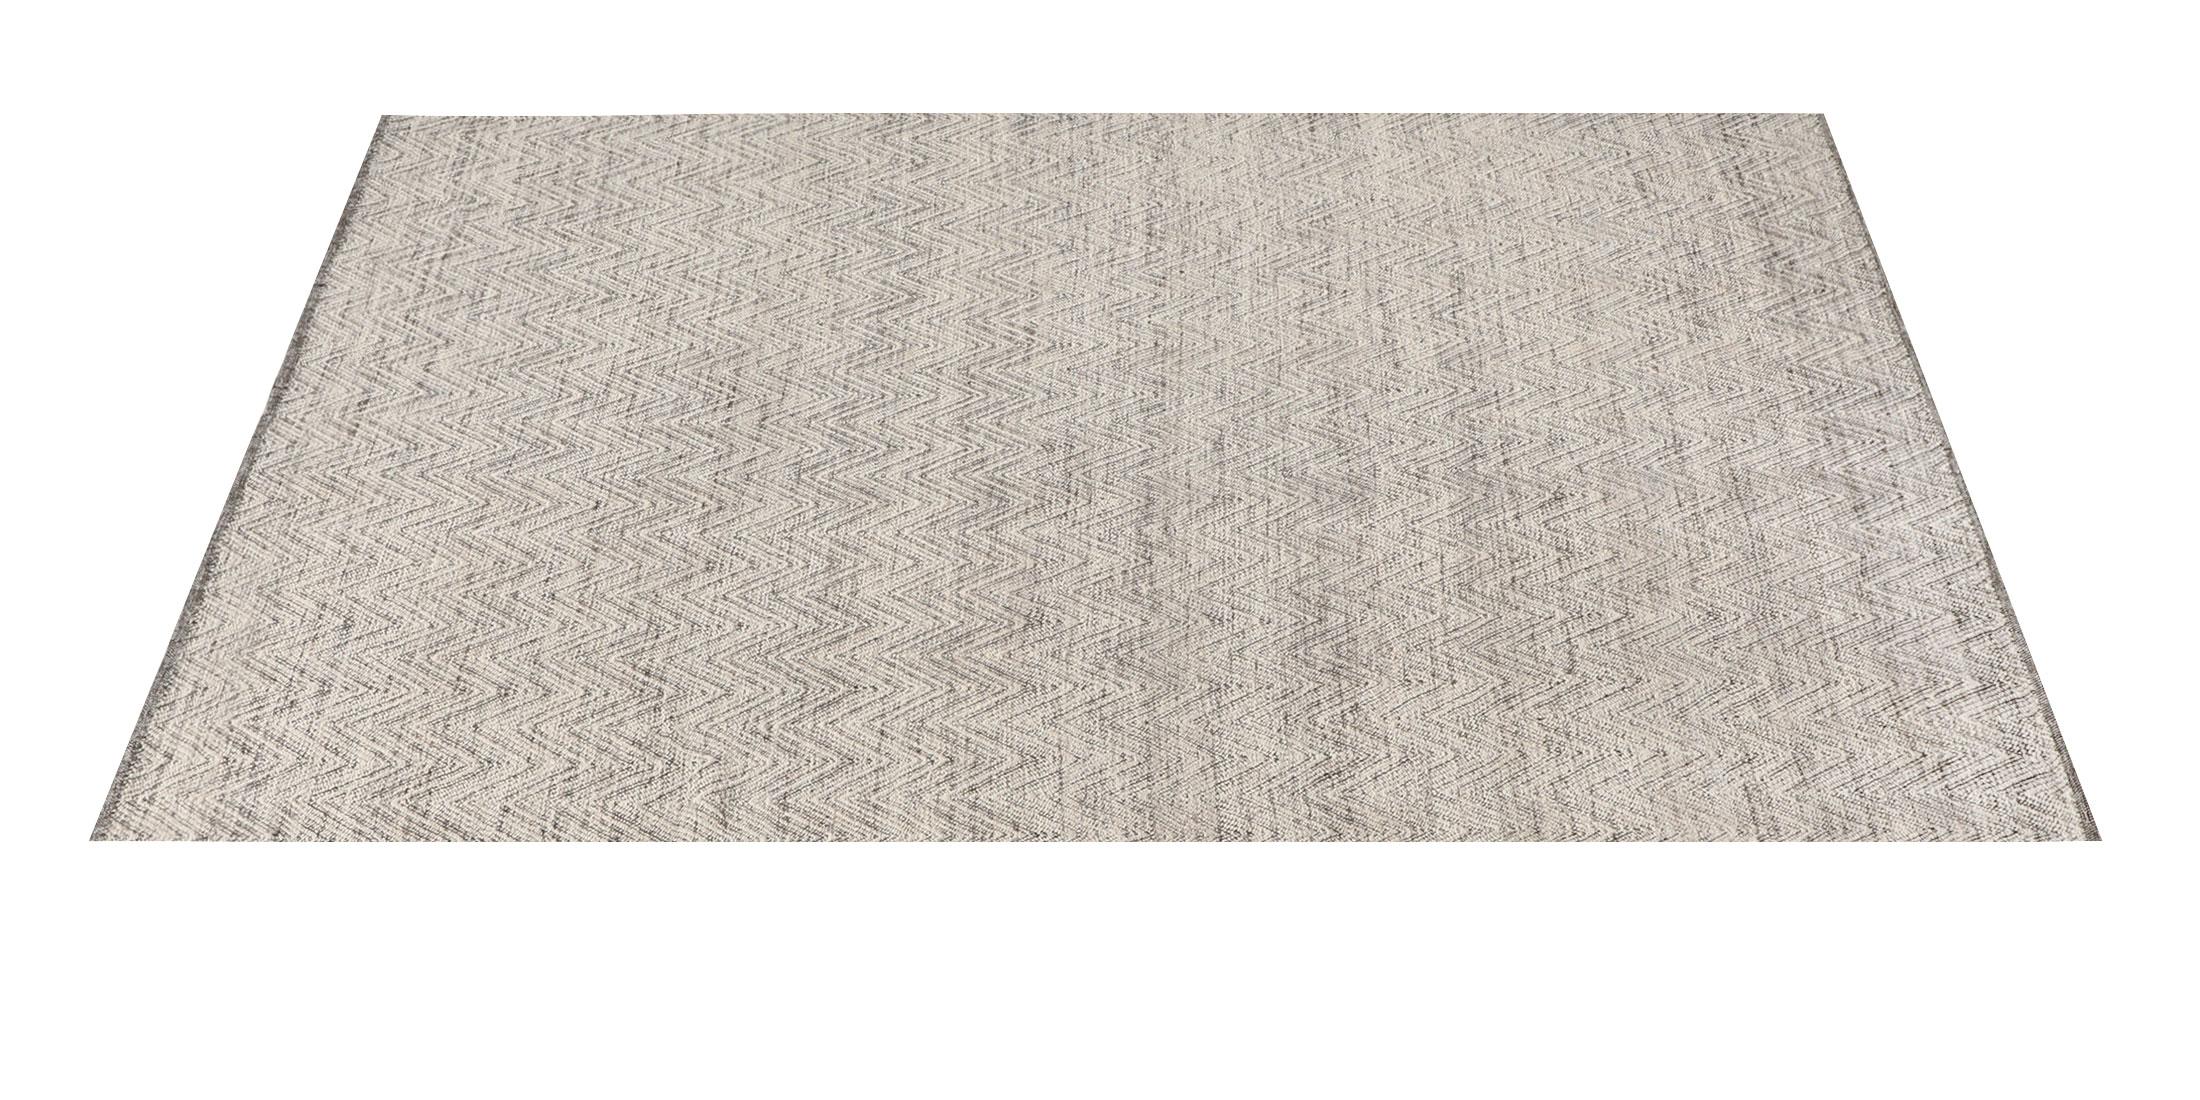 For Sale: Silver Ben Soleimani Ceyah Rug– Hand-woven Plush Textured Wool + Linen Charcoal 10'x14' 2